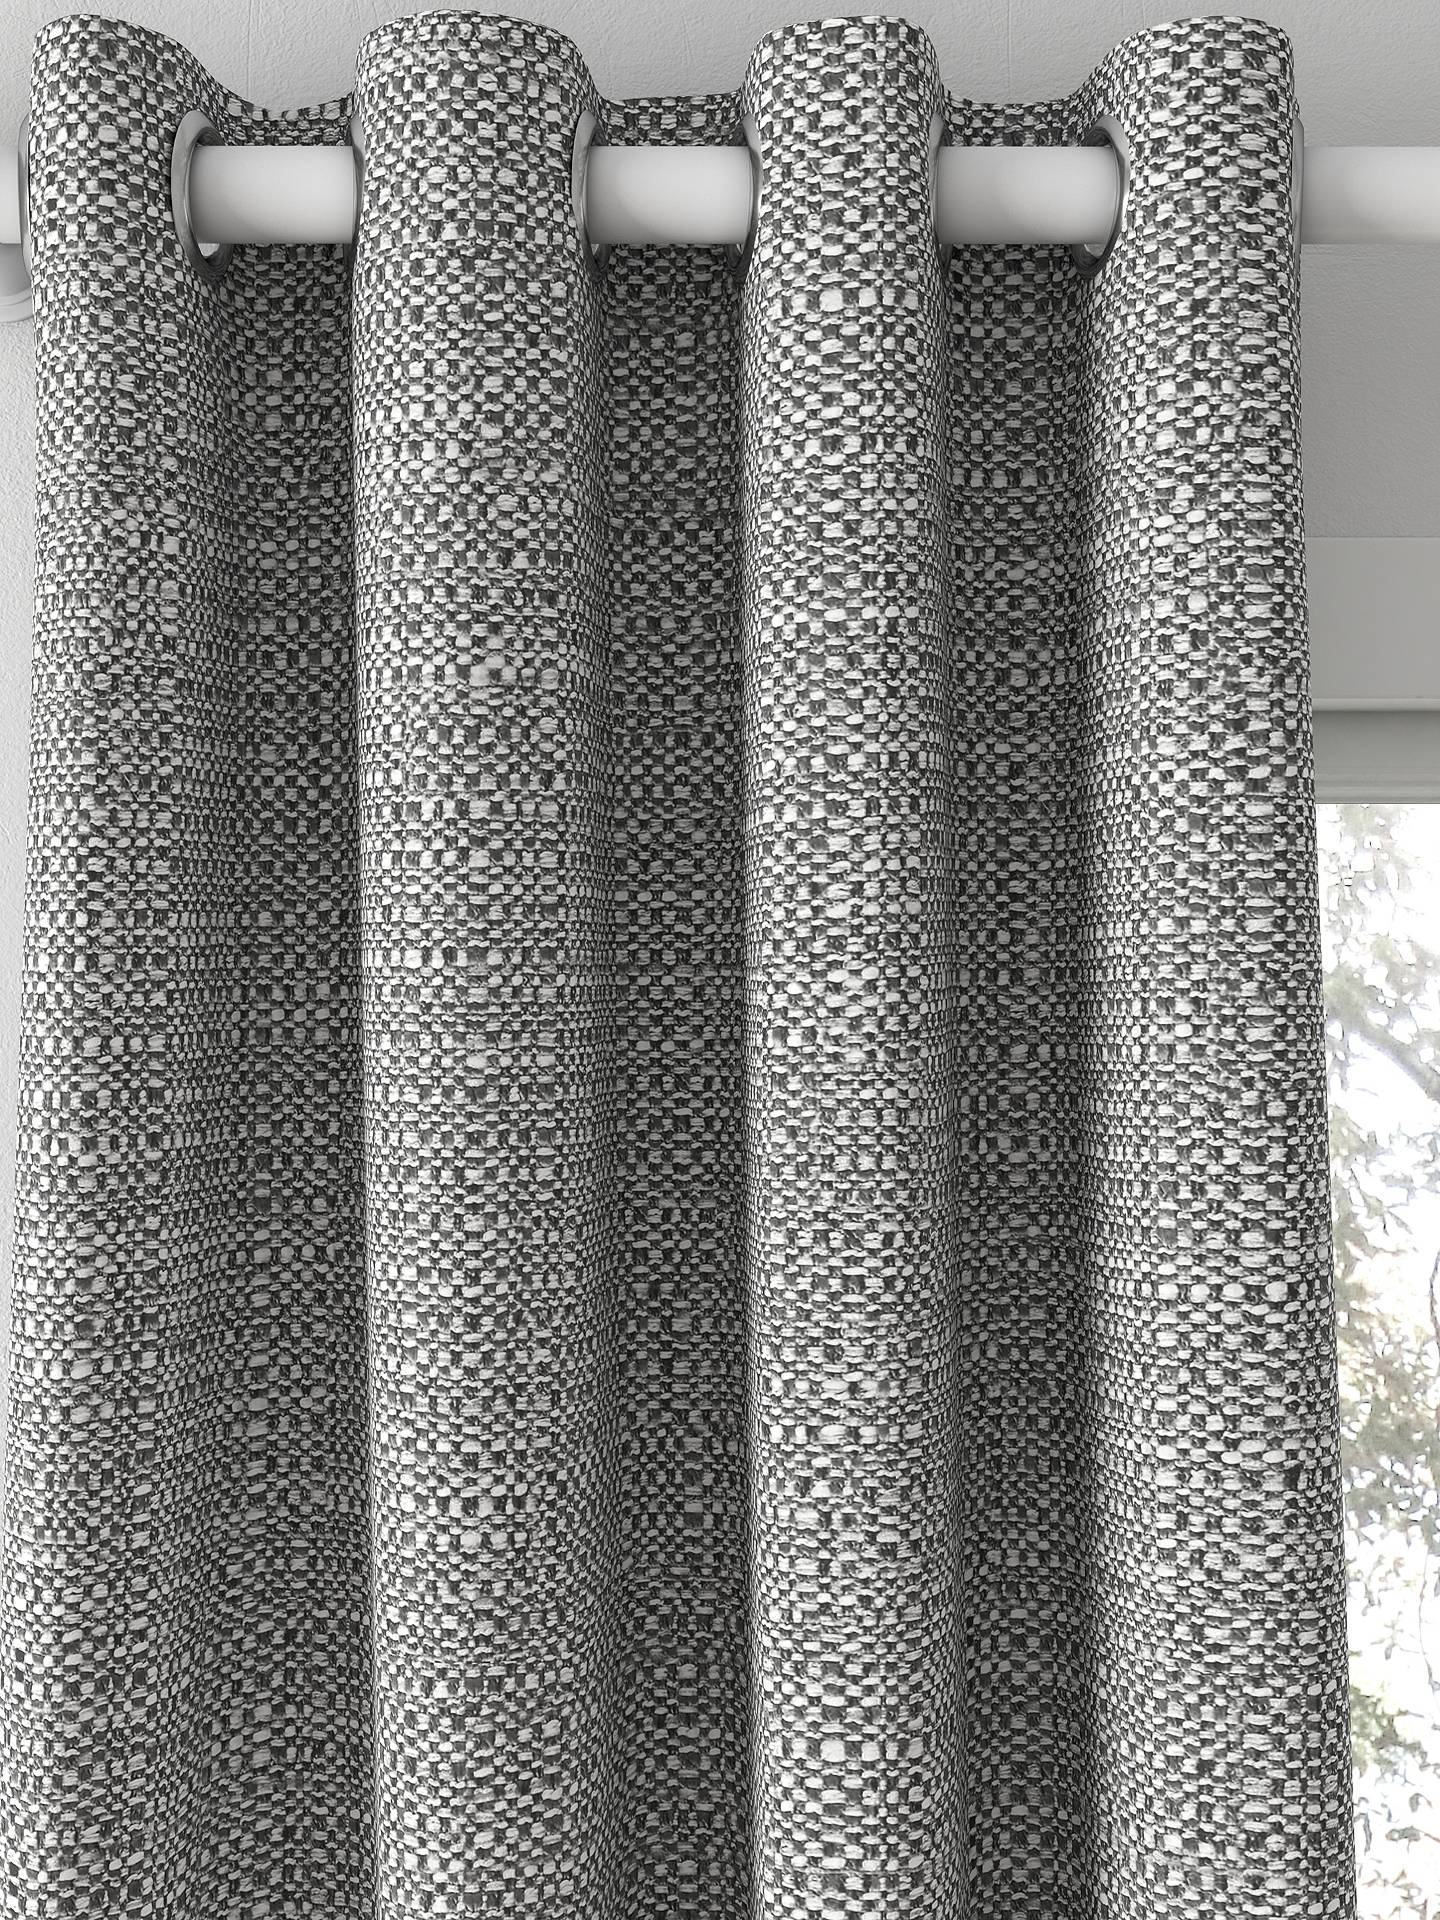 John Lewis Tonal Weave Made to Measure Curtains, Graphite